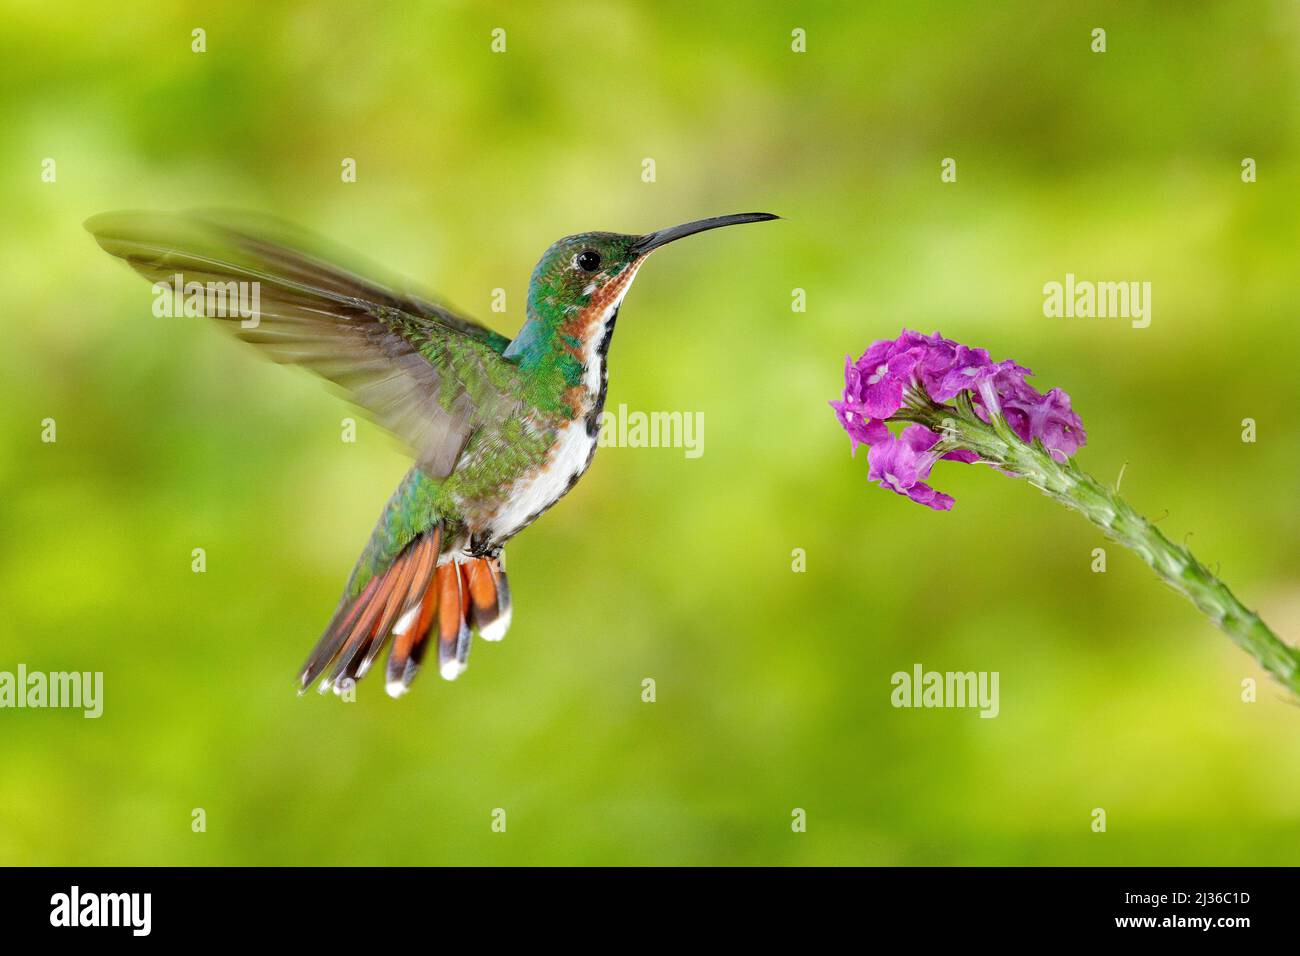 Flying hummingbird. Hummingbird Green-breasted Mango fly, pink flower. Wild tropic bird in nature habitat, wildlife, Costa rica. Pink bloom with tinny Stock Photo